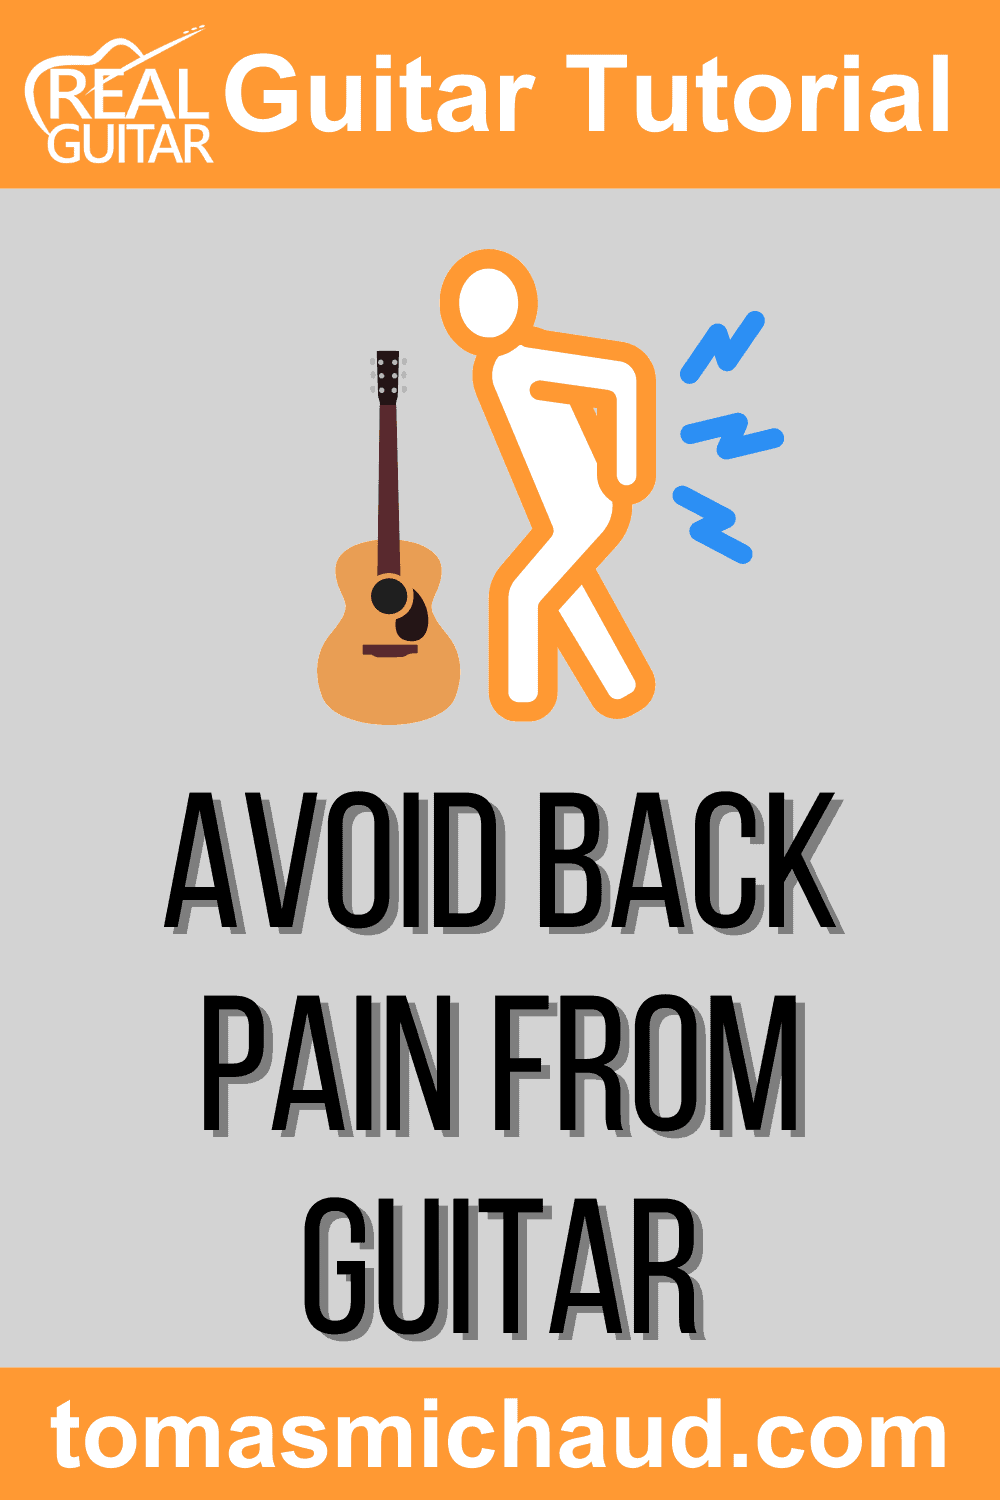 Avoid back pain from guitar